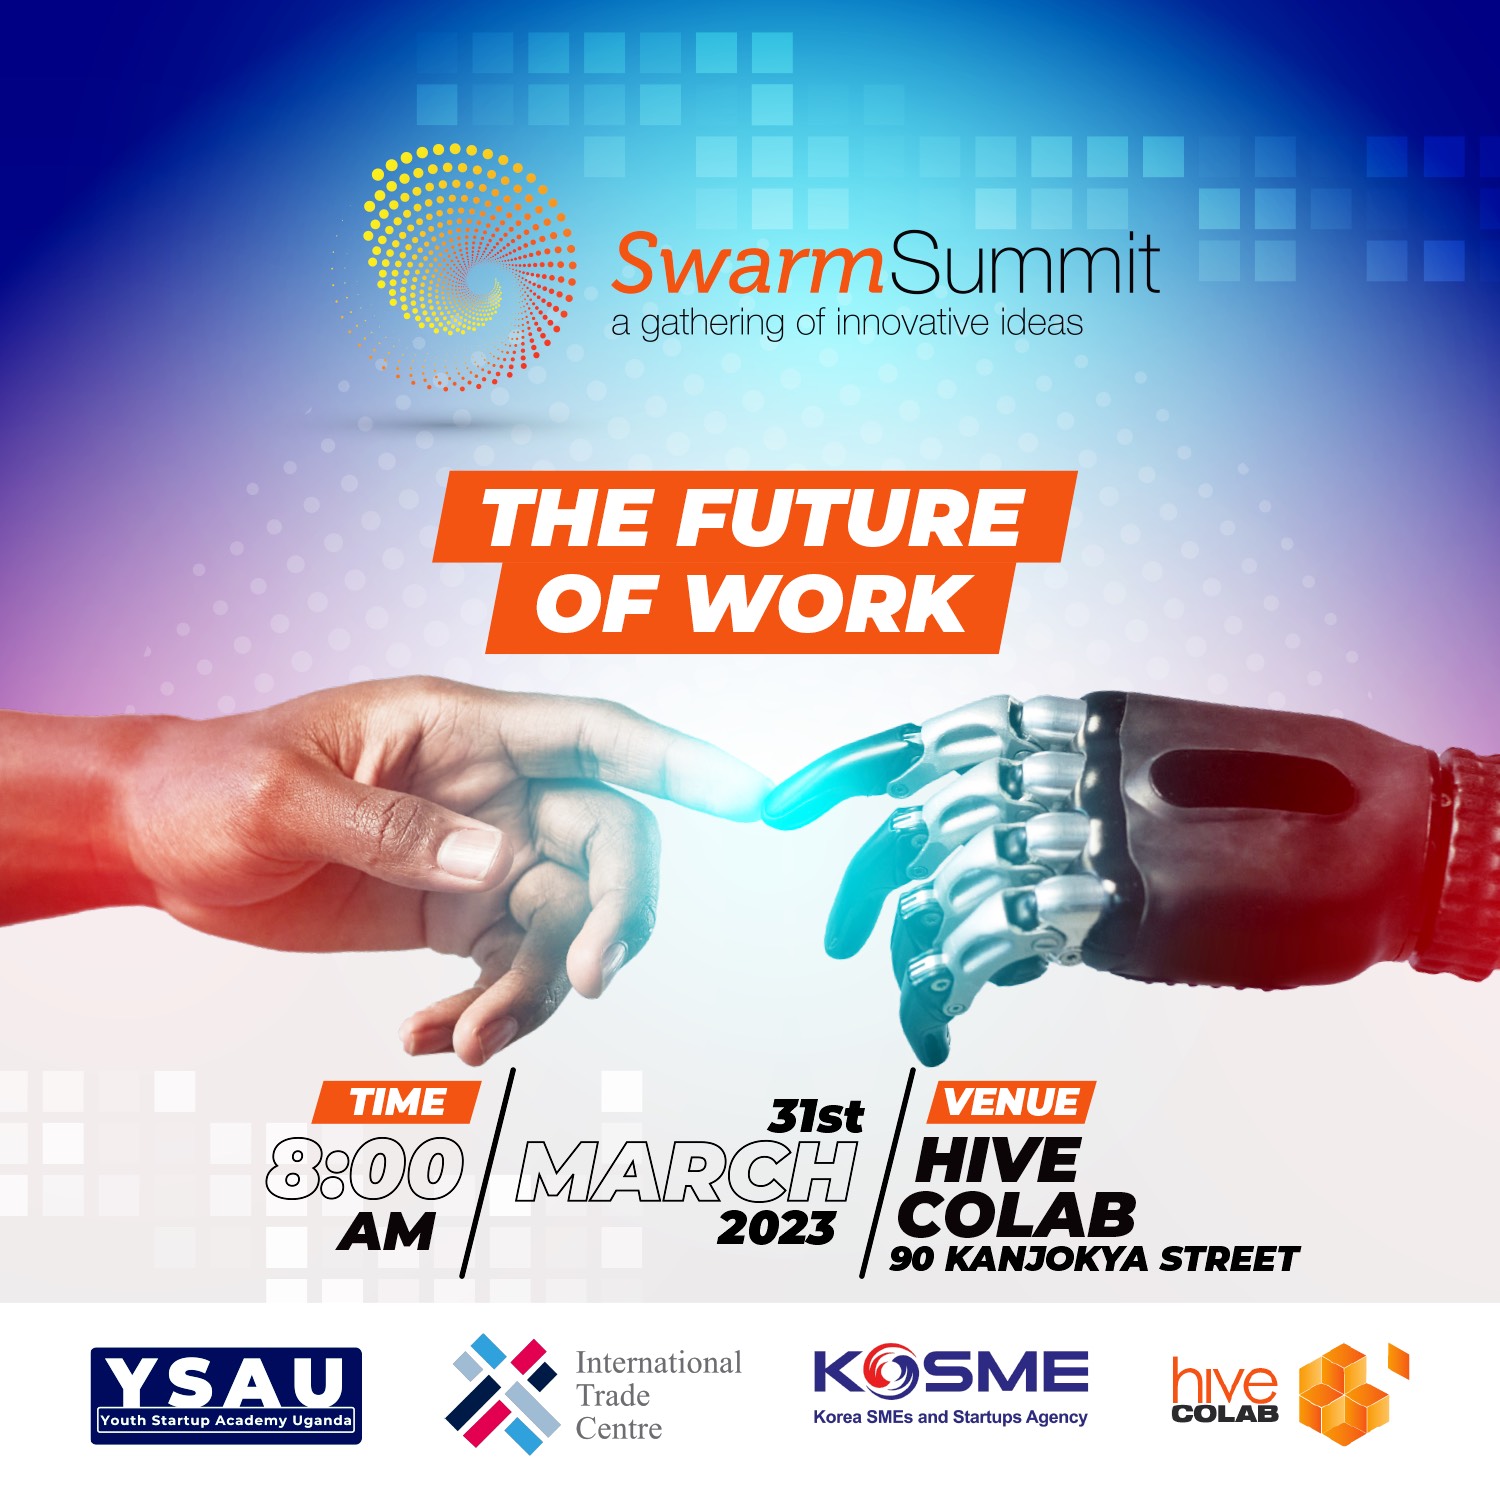 Swarm Summit